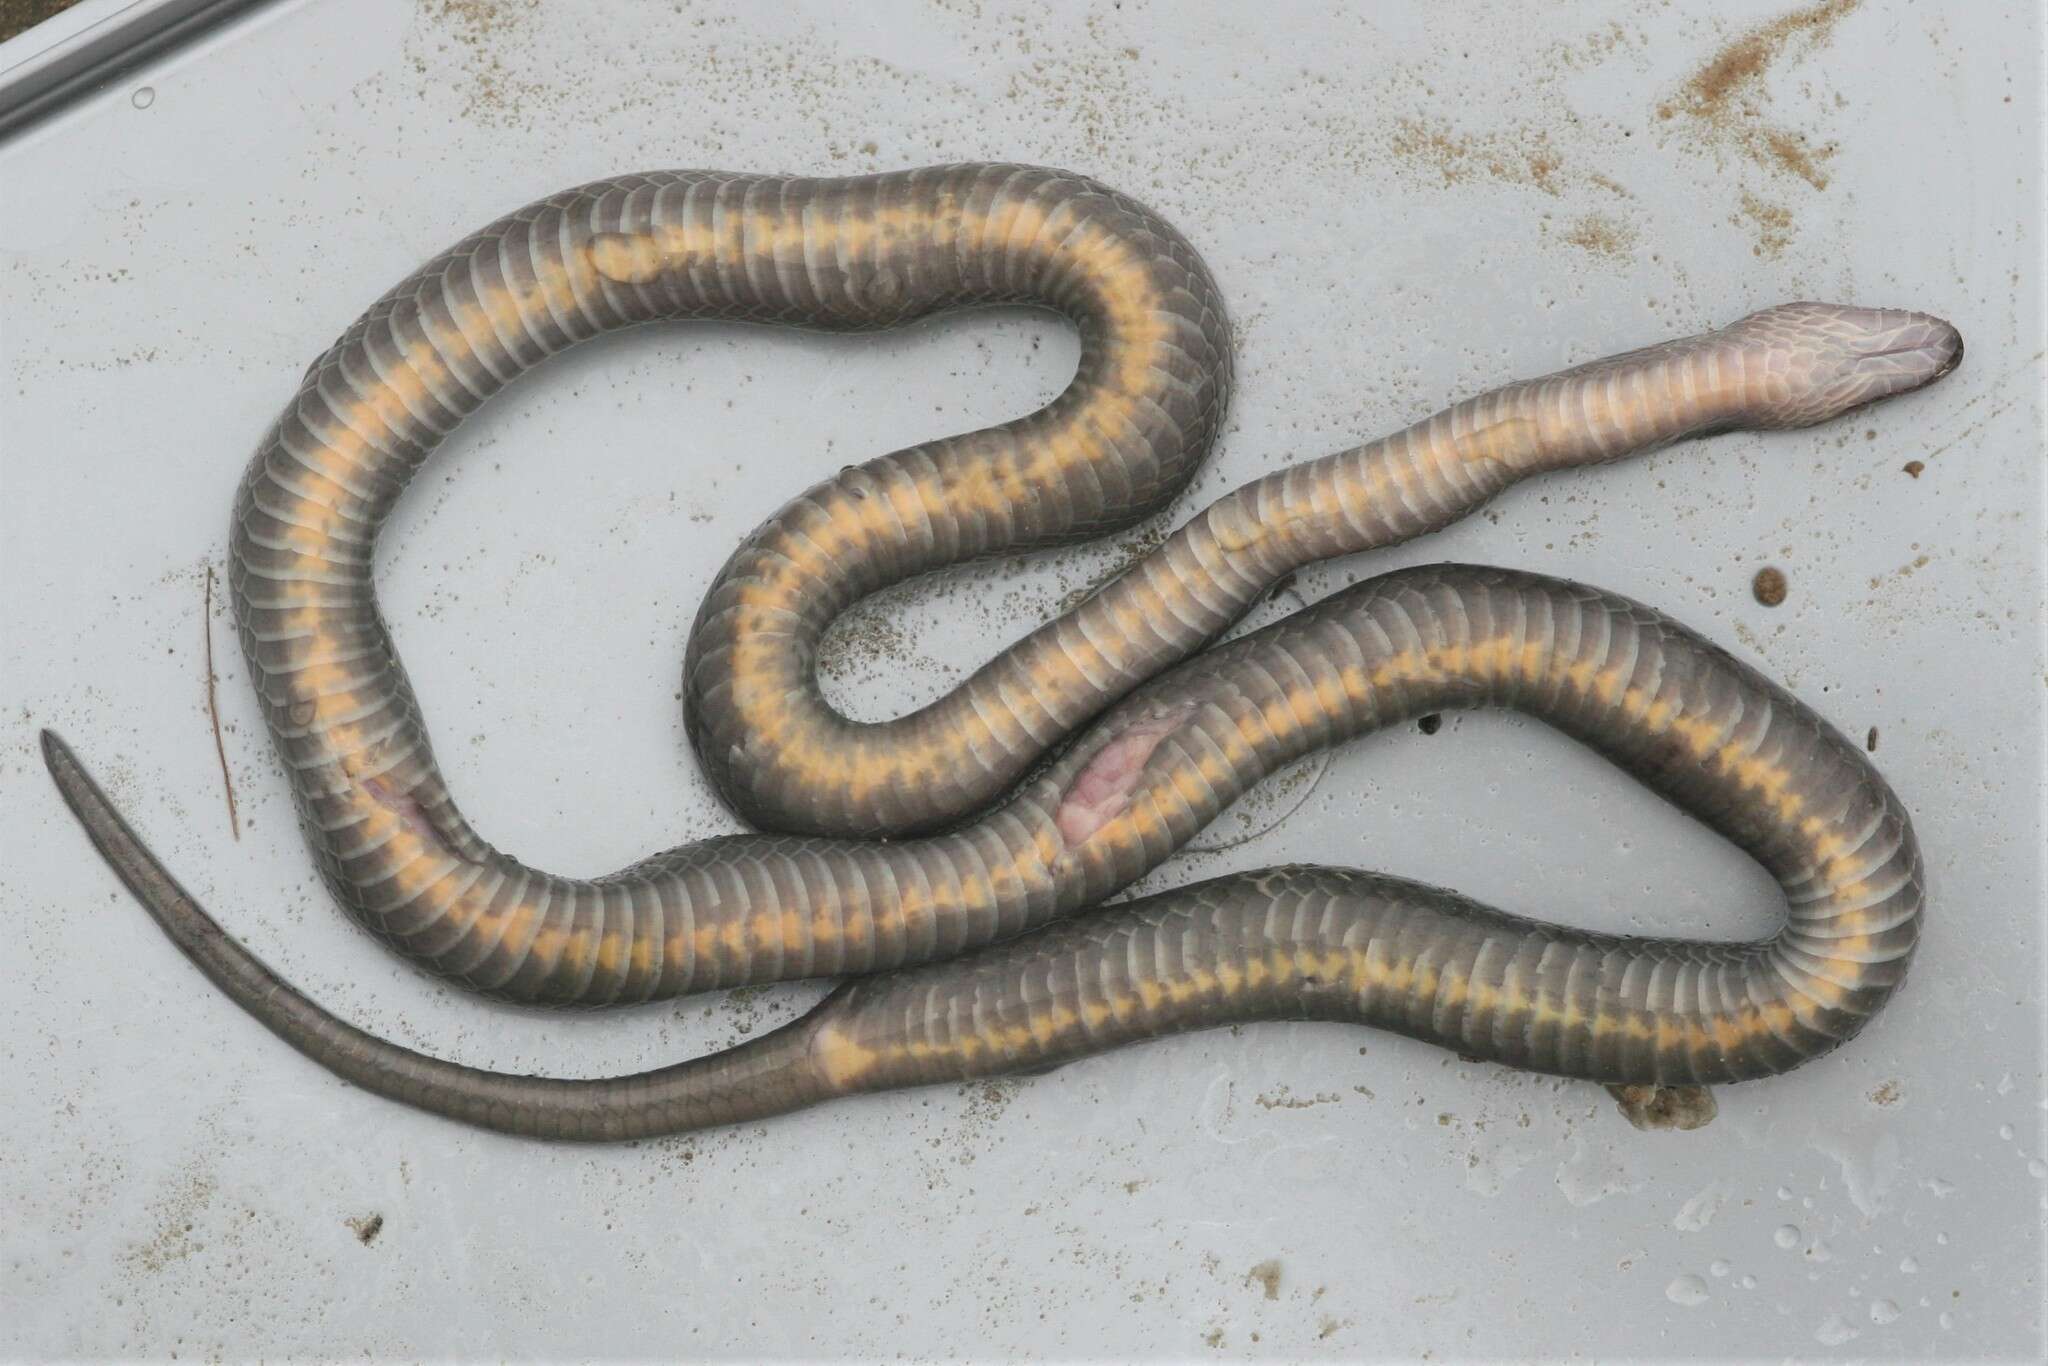 Image of Hallowell's House Snake